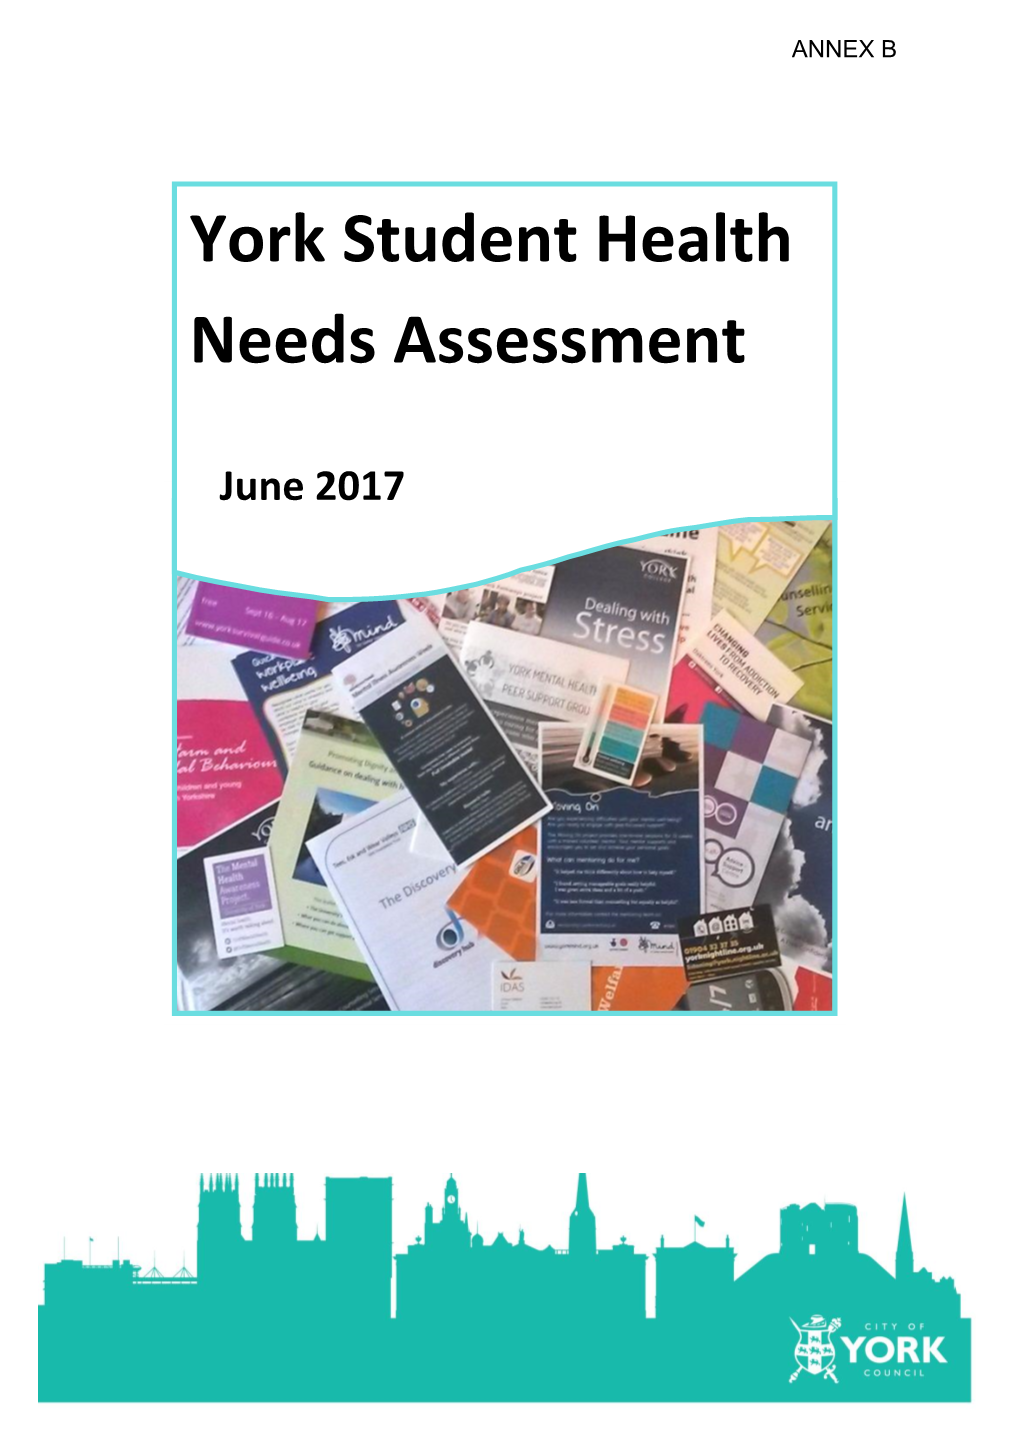 York Student Health Needs Assessment